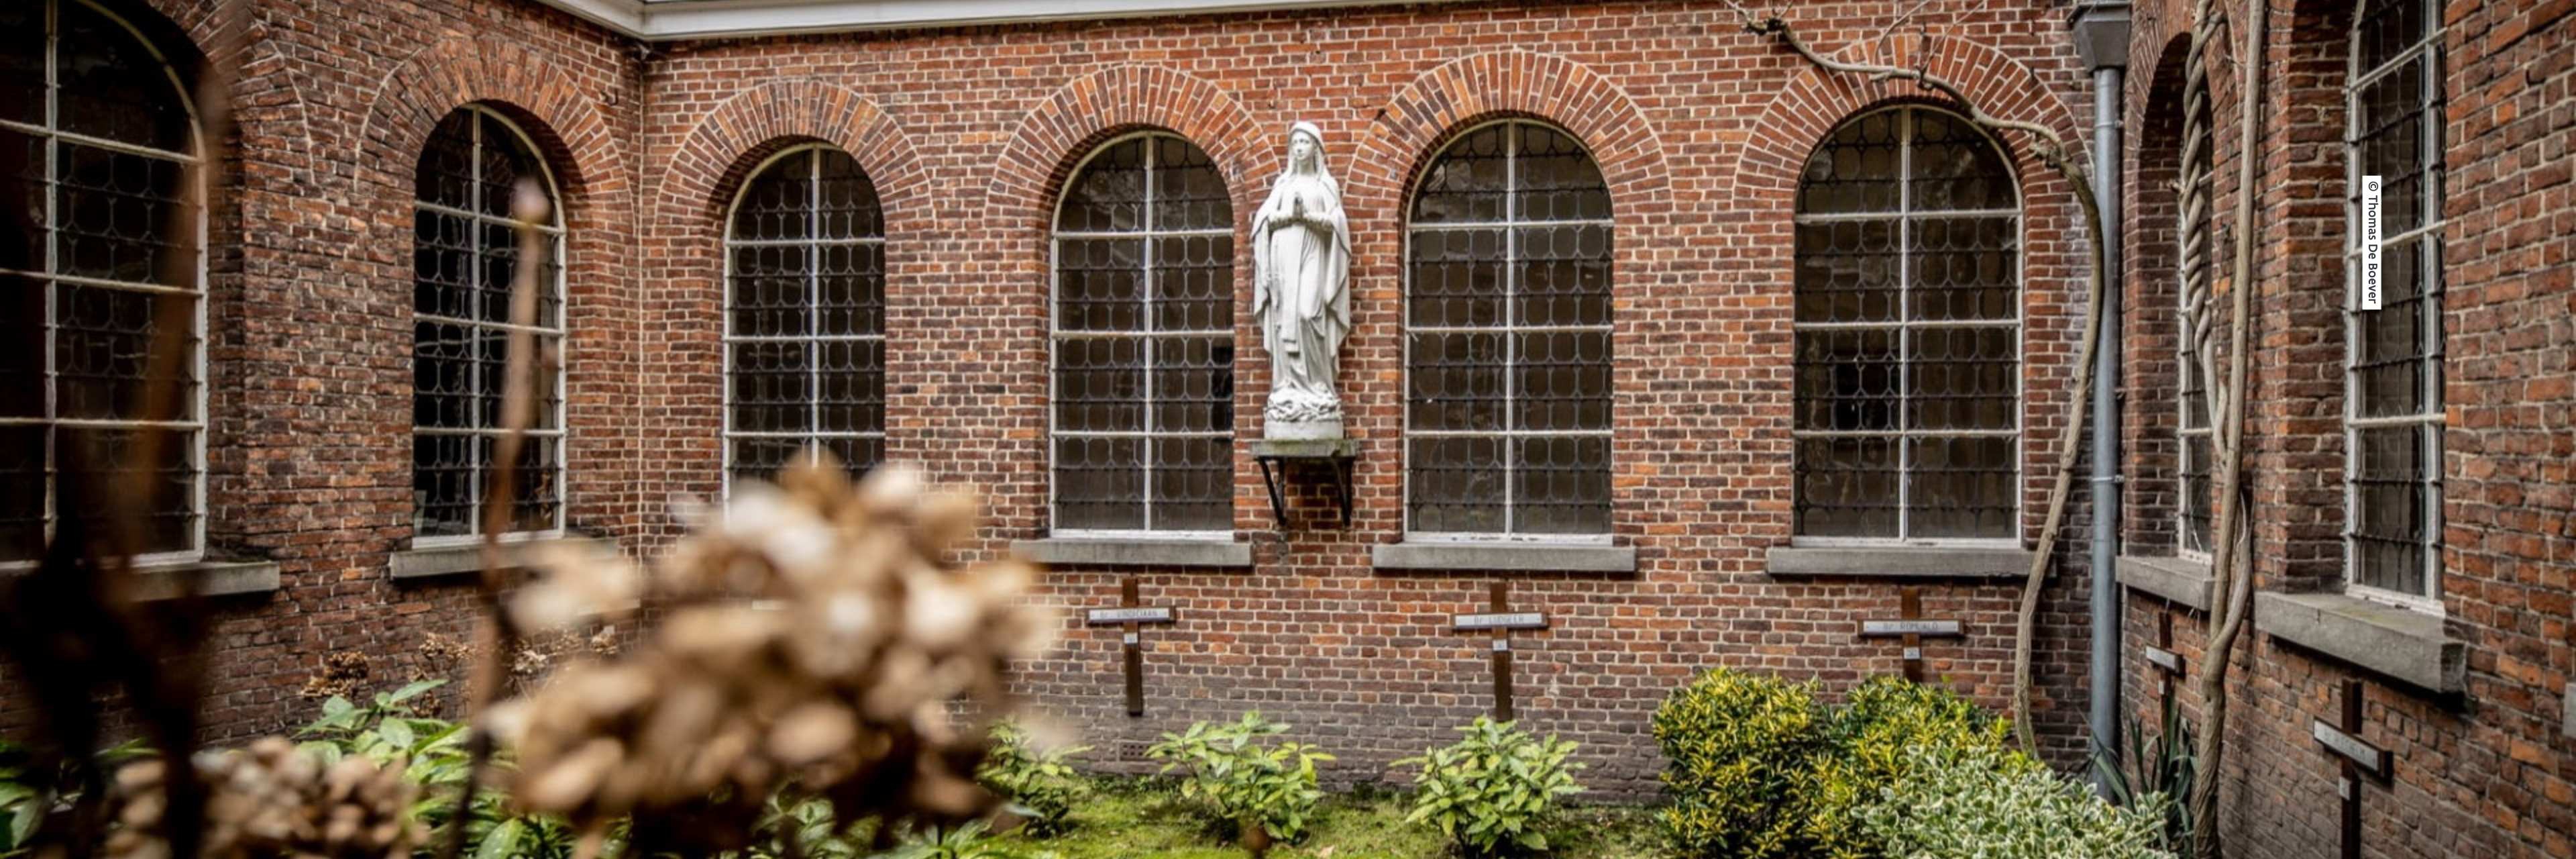 Kapucijnen klooster Brugge (c) Thomas De Boever Website Header image